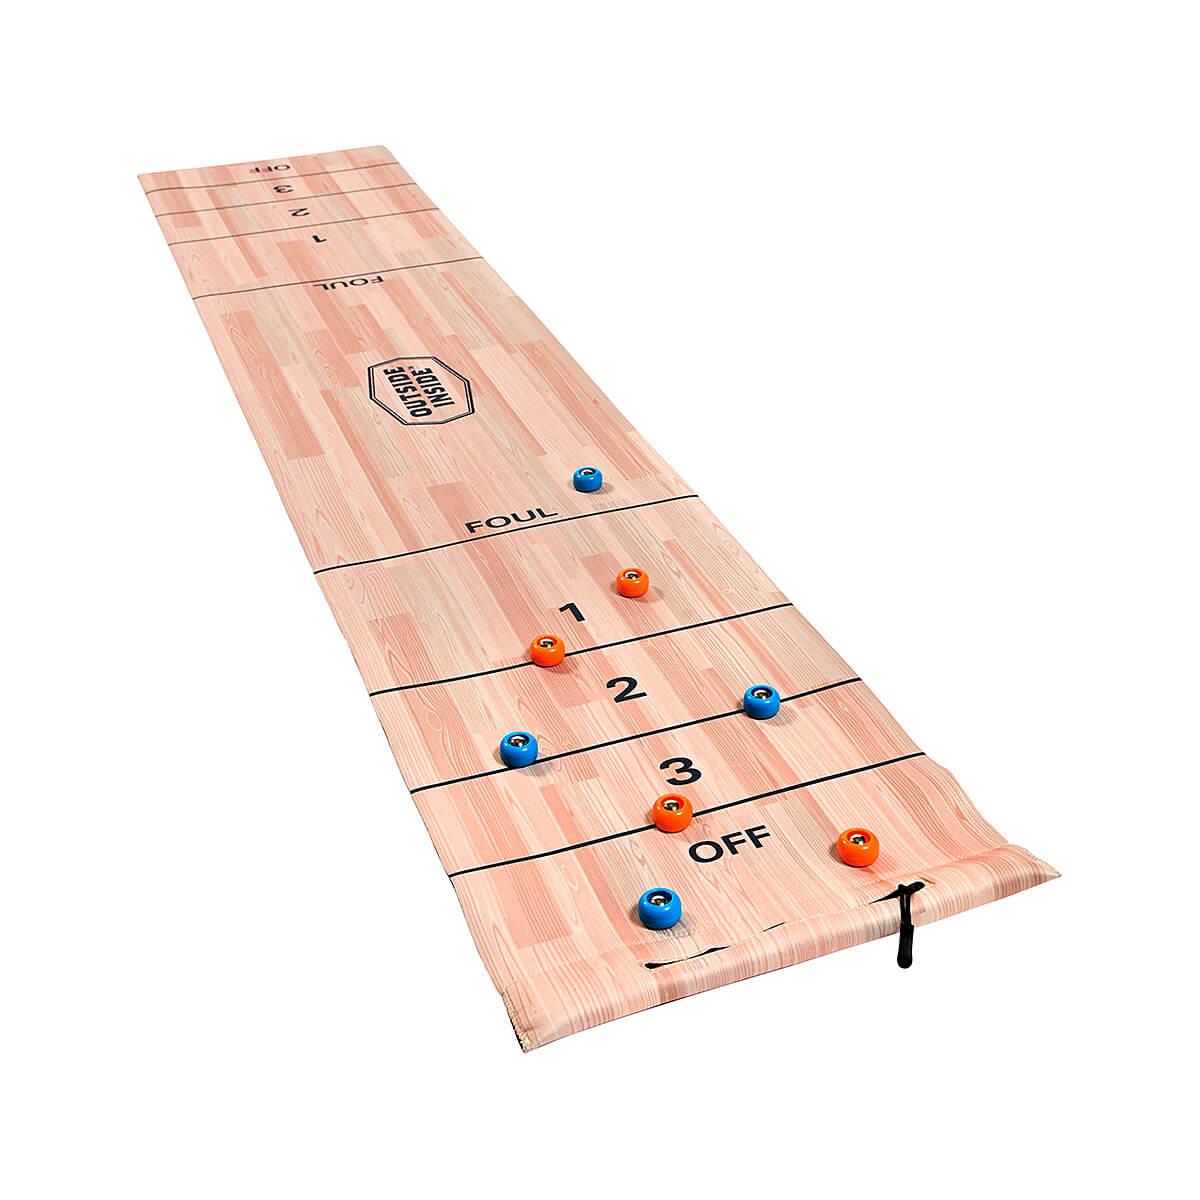  Outside Inside Roll- Up Shuffle Board Game